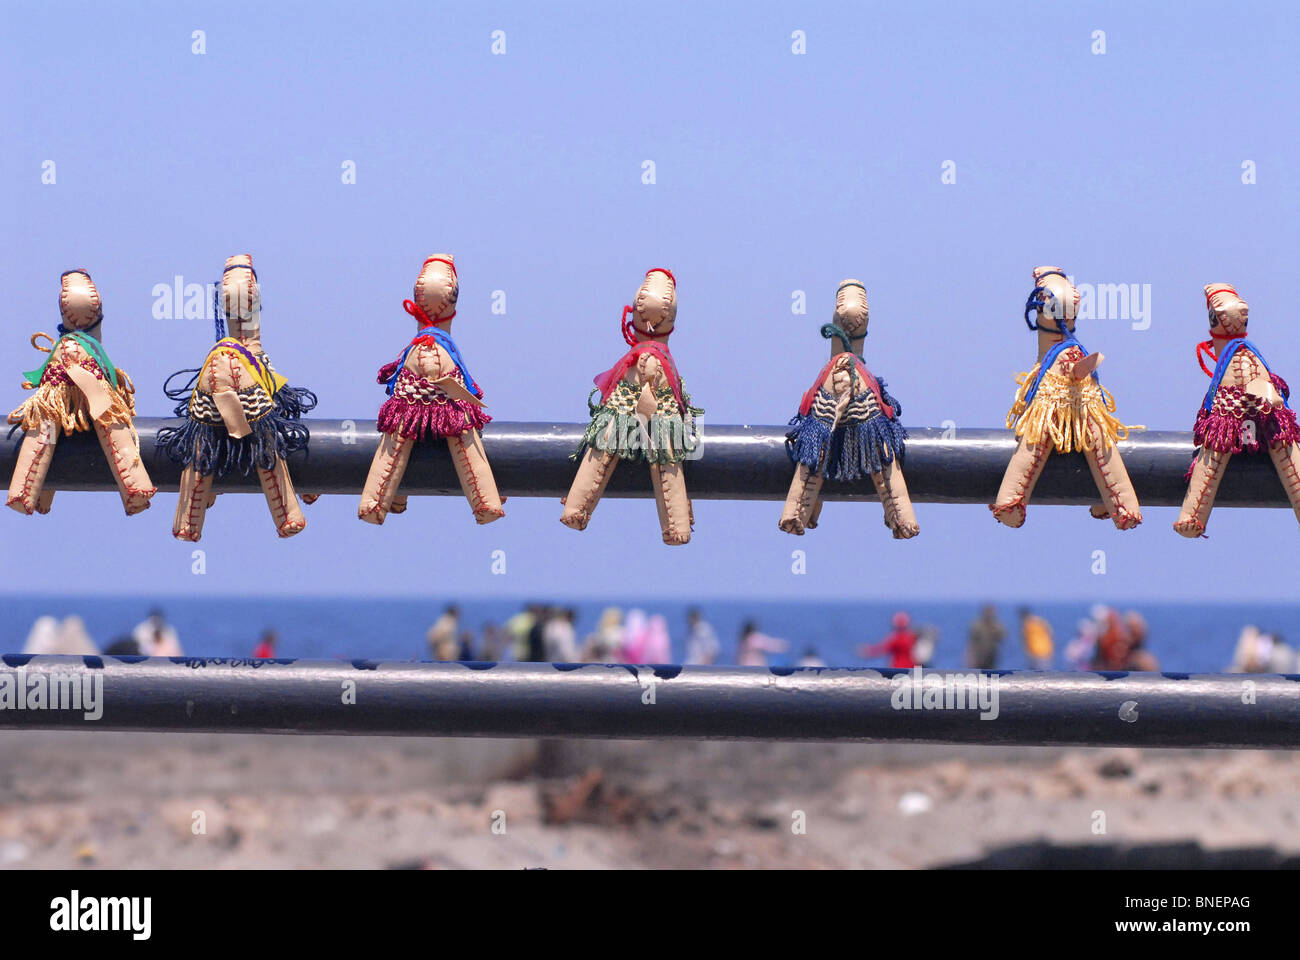 Egyptian diminutive souvenirs near the sea shore Stock Photo